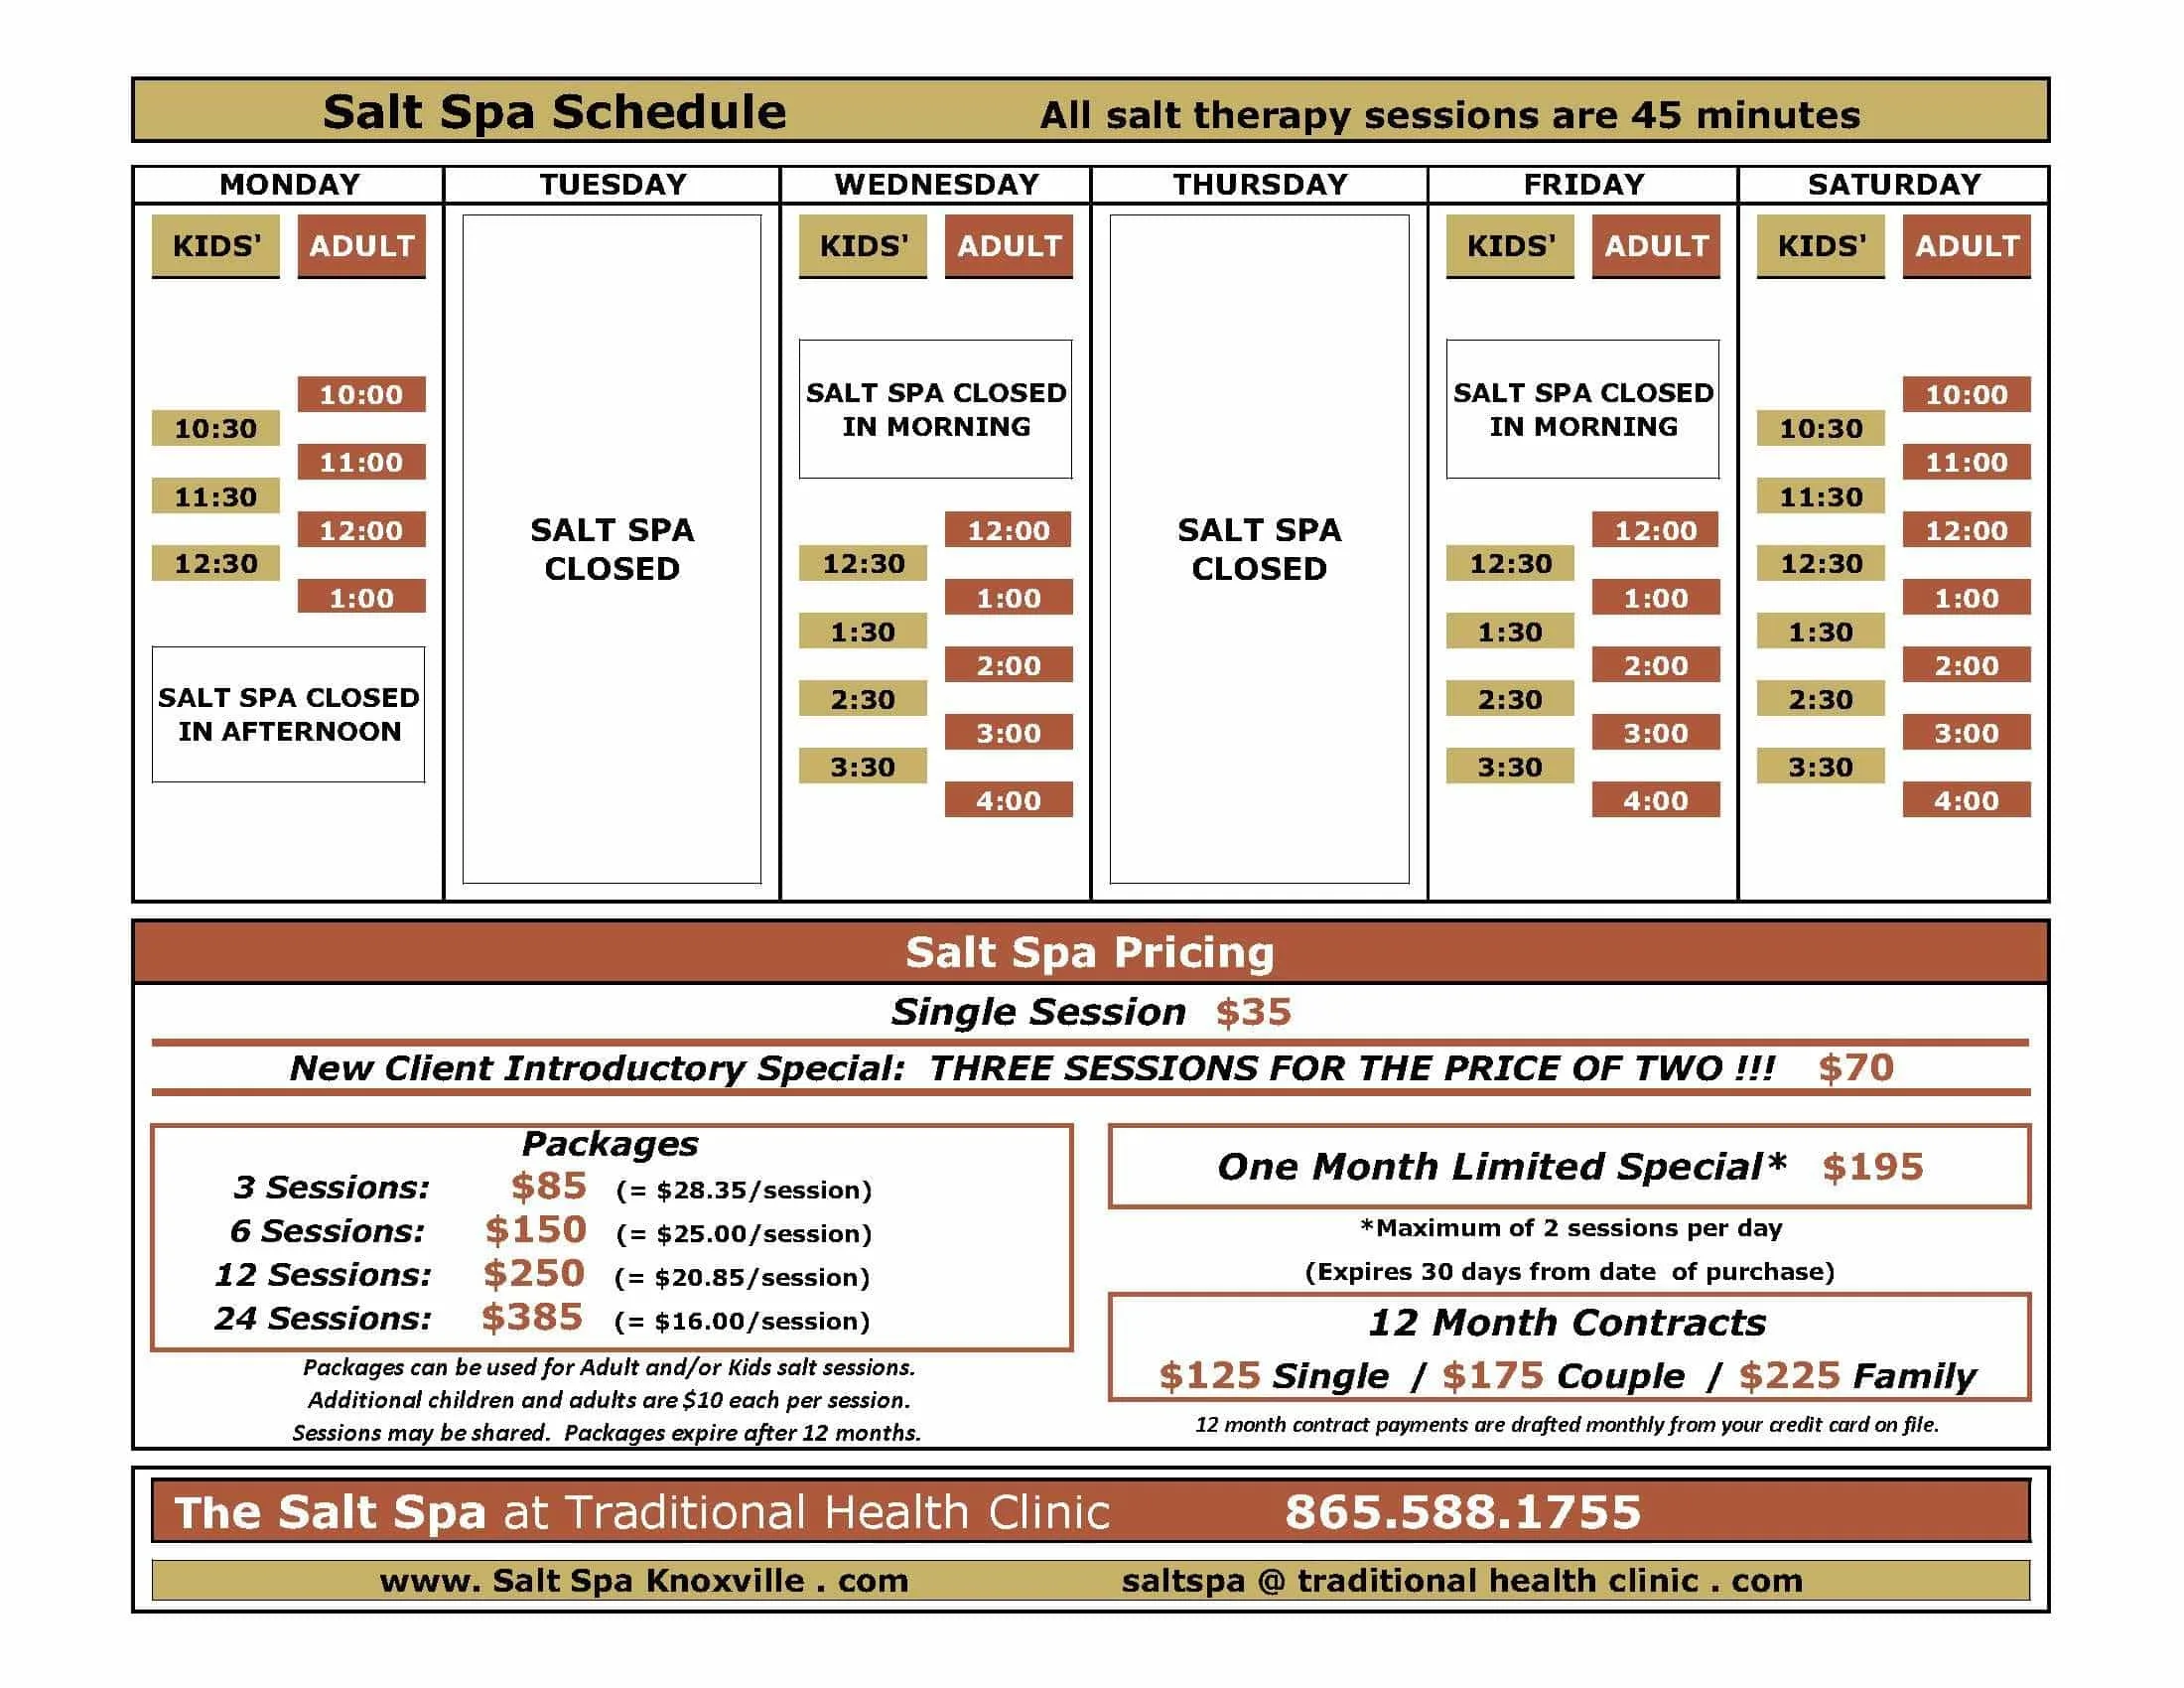 2019 Salt Spa Schedule & Pricing